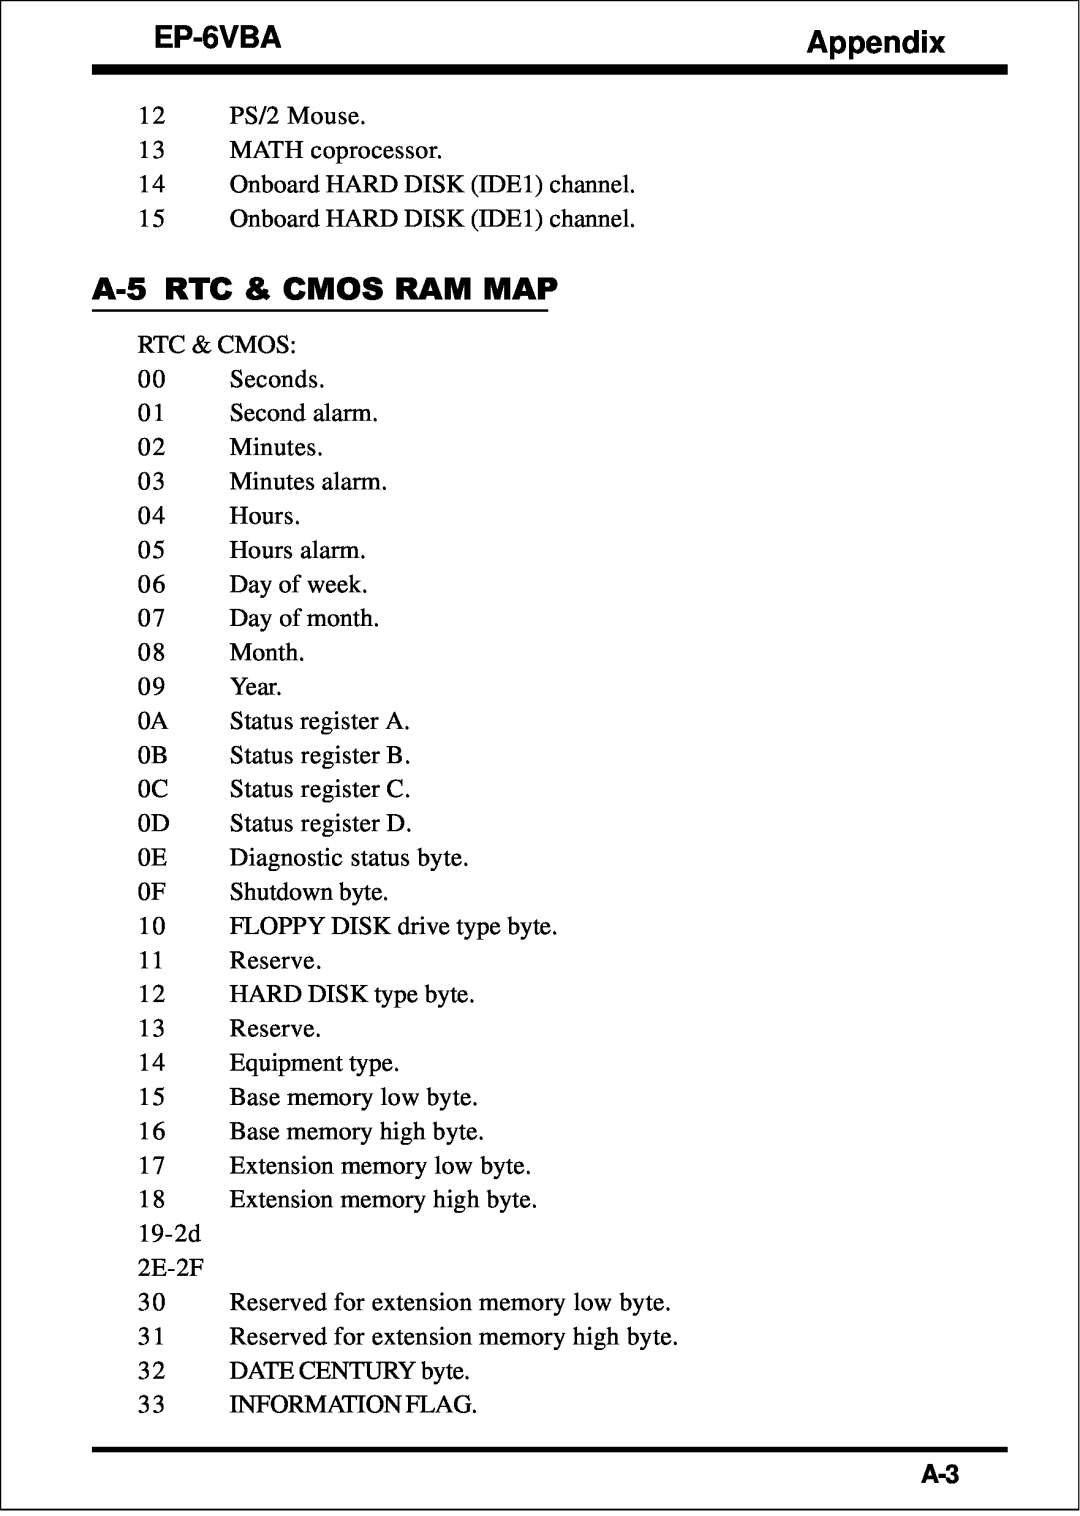 EPoX Computer EP-6VBA specifications Appendix, A-5 RTC & CMOS RAM MAP 